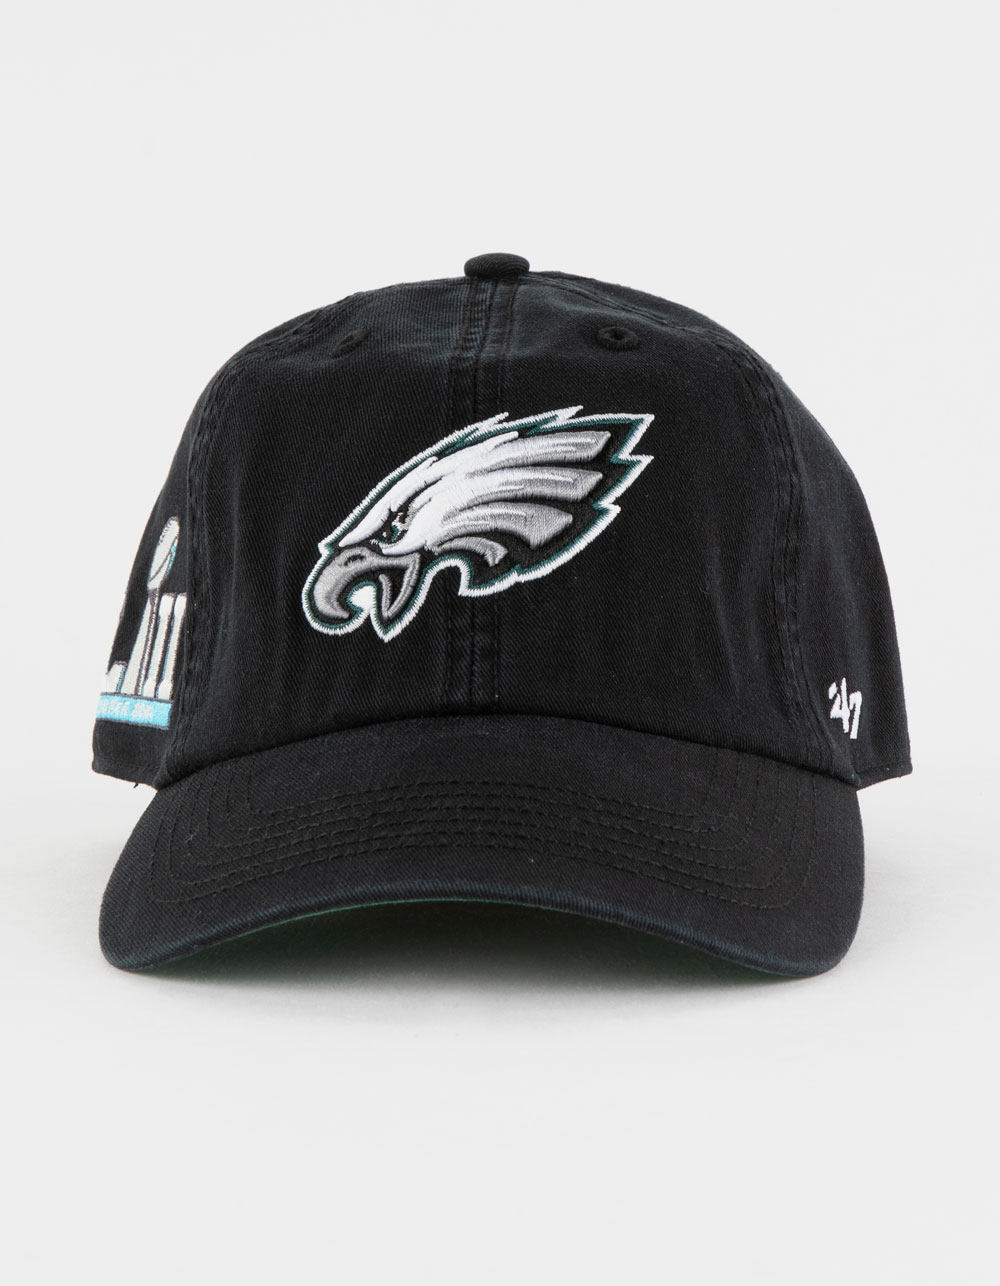 Men's '47 Black Philadelphia Eagles Sure Shot Franchise Fitted Hat Size: Small